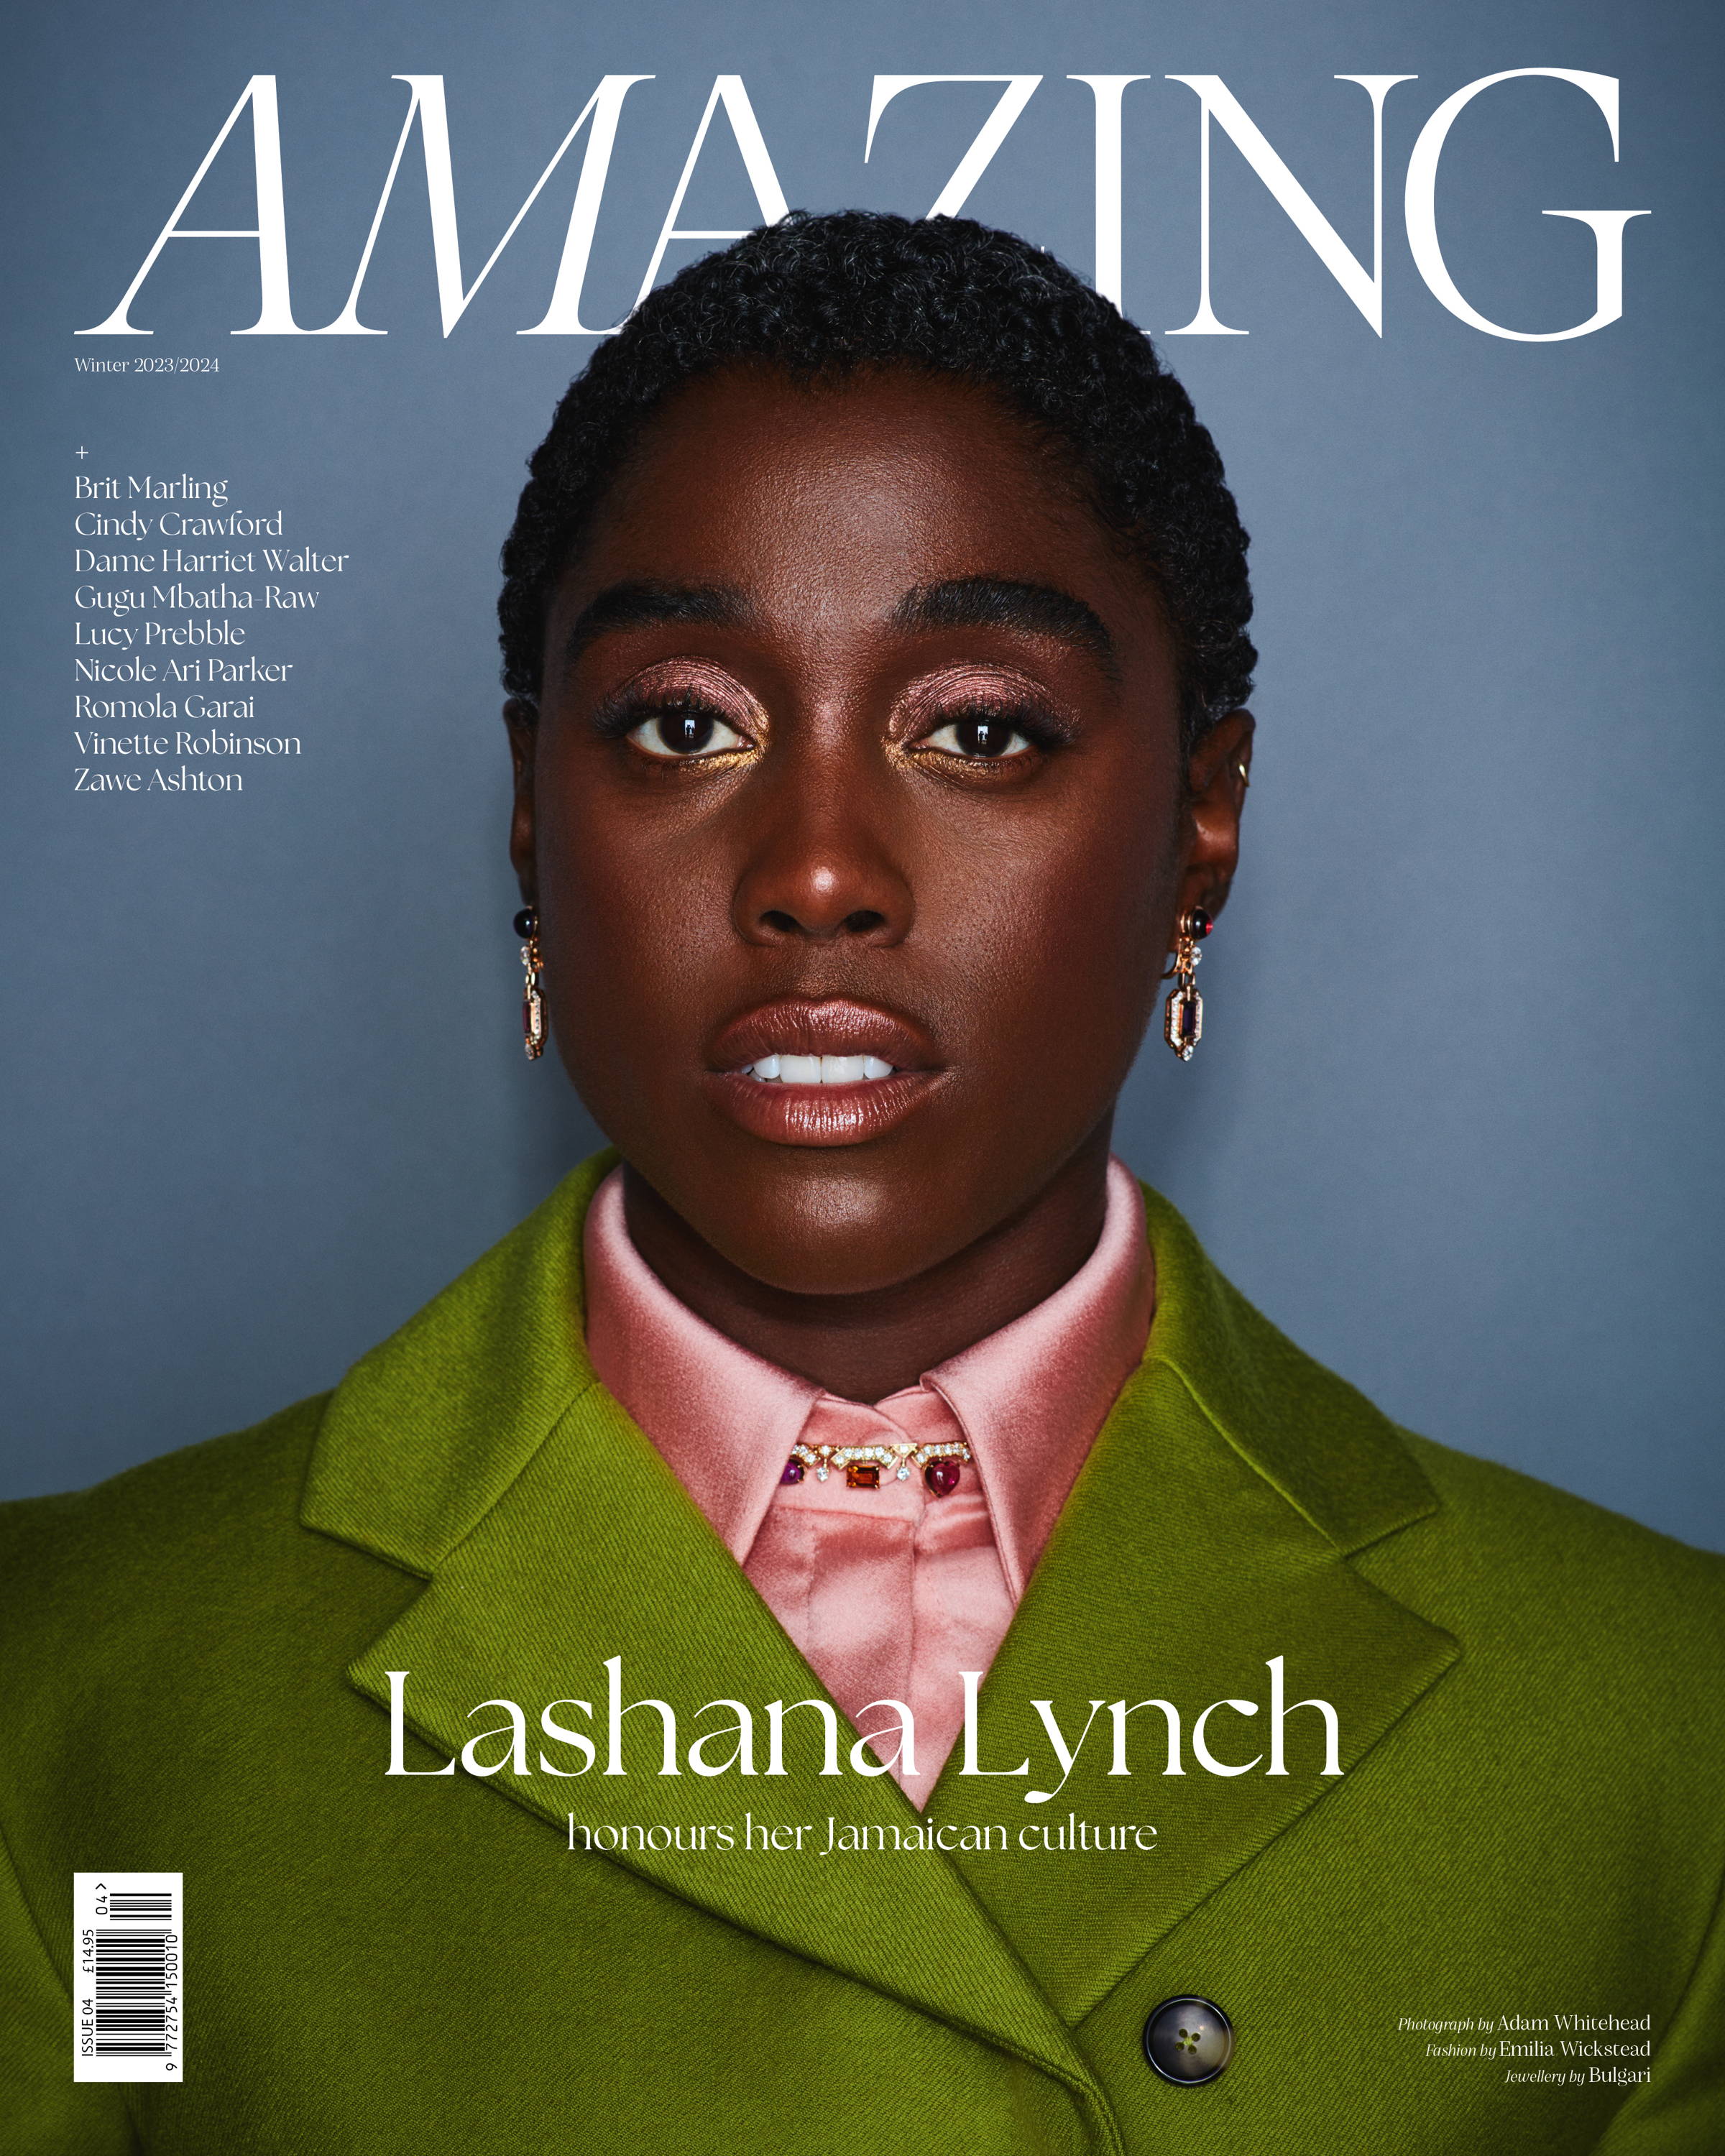 Lashana Lynch covers AMAZING magazine issue 4 by Adam Whitehead